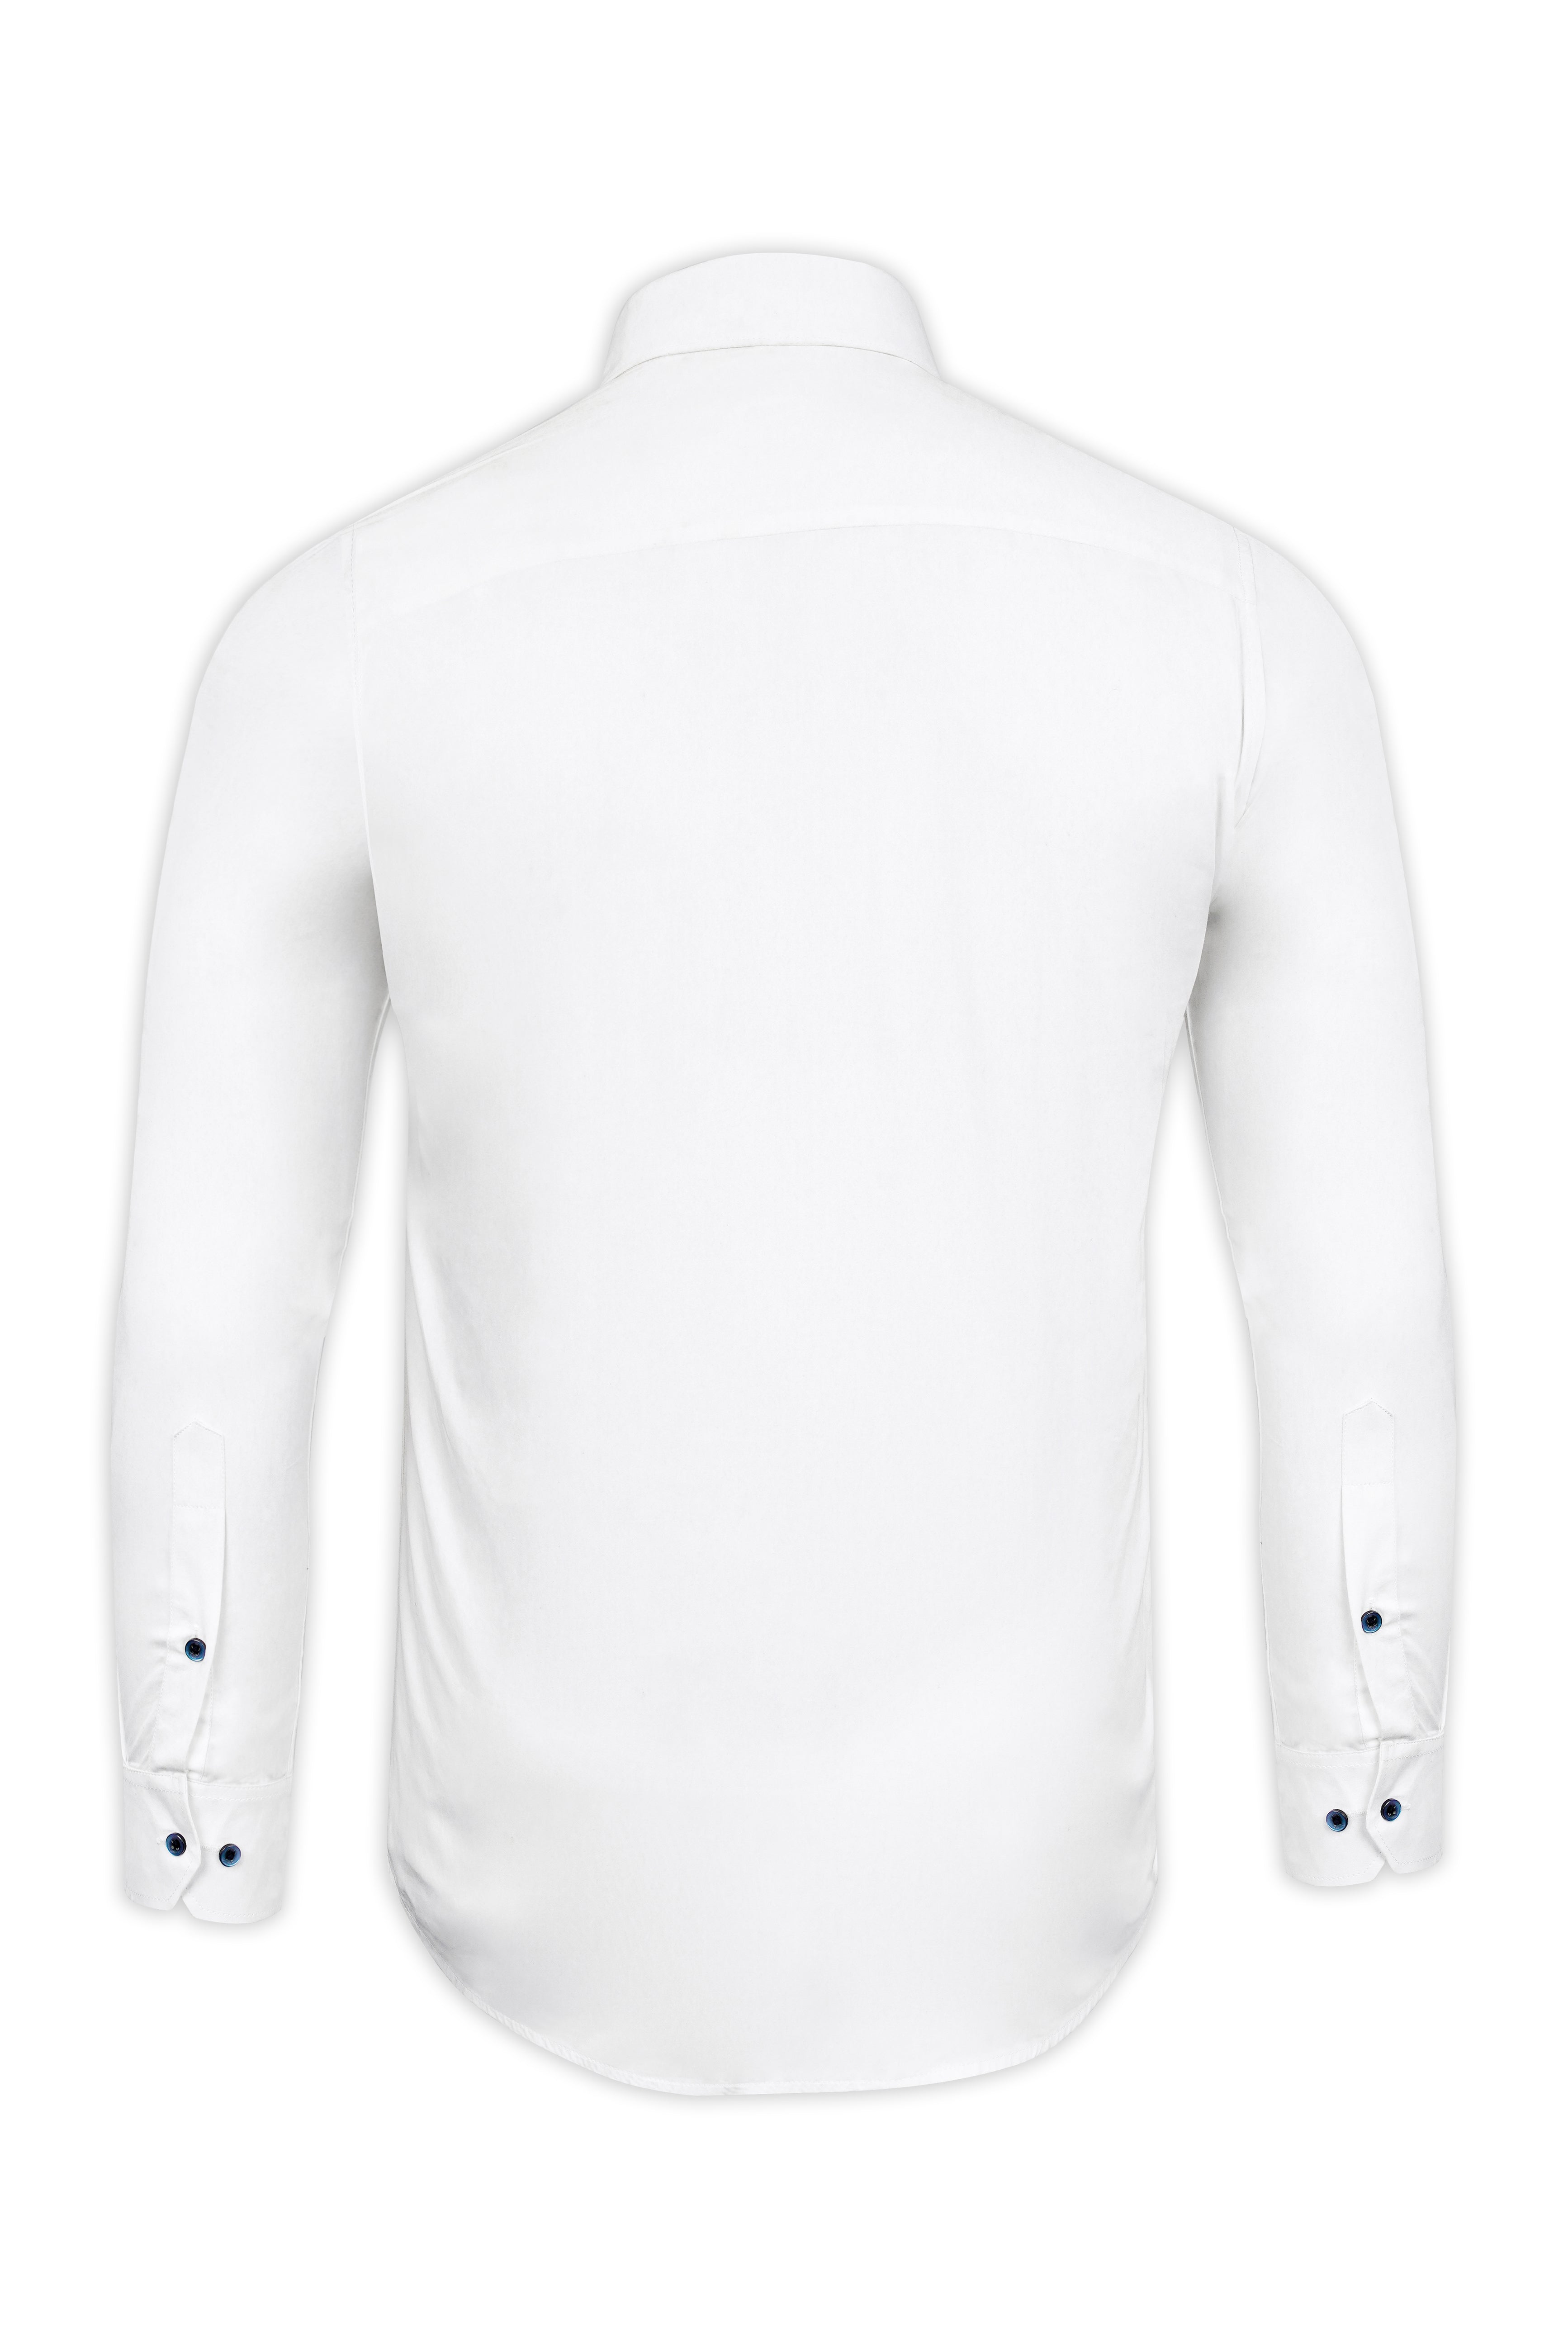 Bright White MAA Embroidered Subtle Sheen Super Soft Premium Cotton Designer Shirt 1066-BLE-E269-38, 1066-BLE-E269-H-38, 1066-BLE-E269-39, 1066-BLE-E269-H-39, 1066-BLE-E269-40, 1066-BLE-E269-H-40, 1066-BLE-E269-42, 1066-BLE-E269-H-42, 1066-BLE-E269-44, 1066-BLE-E269-H-44, 1066-BLE-E269-46, 1066-BLE-E269-H-46, 1066-BLE-E269-48, 1066-BLE-E269-H-48, 1066-BLE-E269-50, 1066-BLE-E269-H-50, 1066-BLE-E269-52, 1066-BLE-E269-H-52